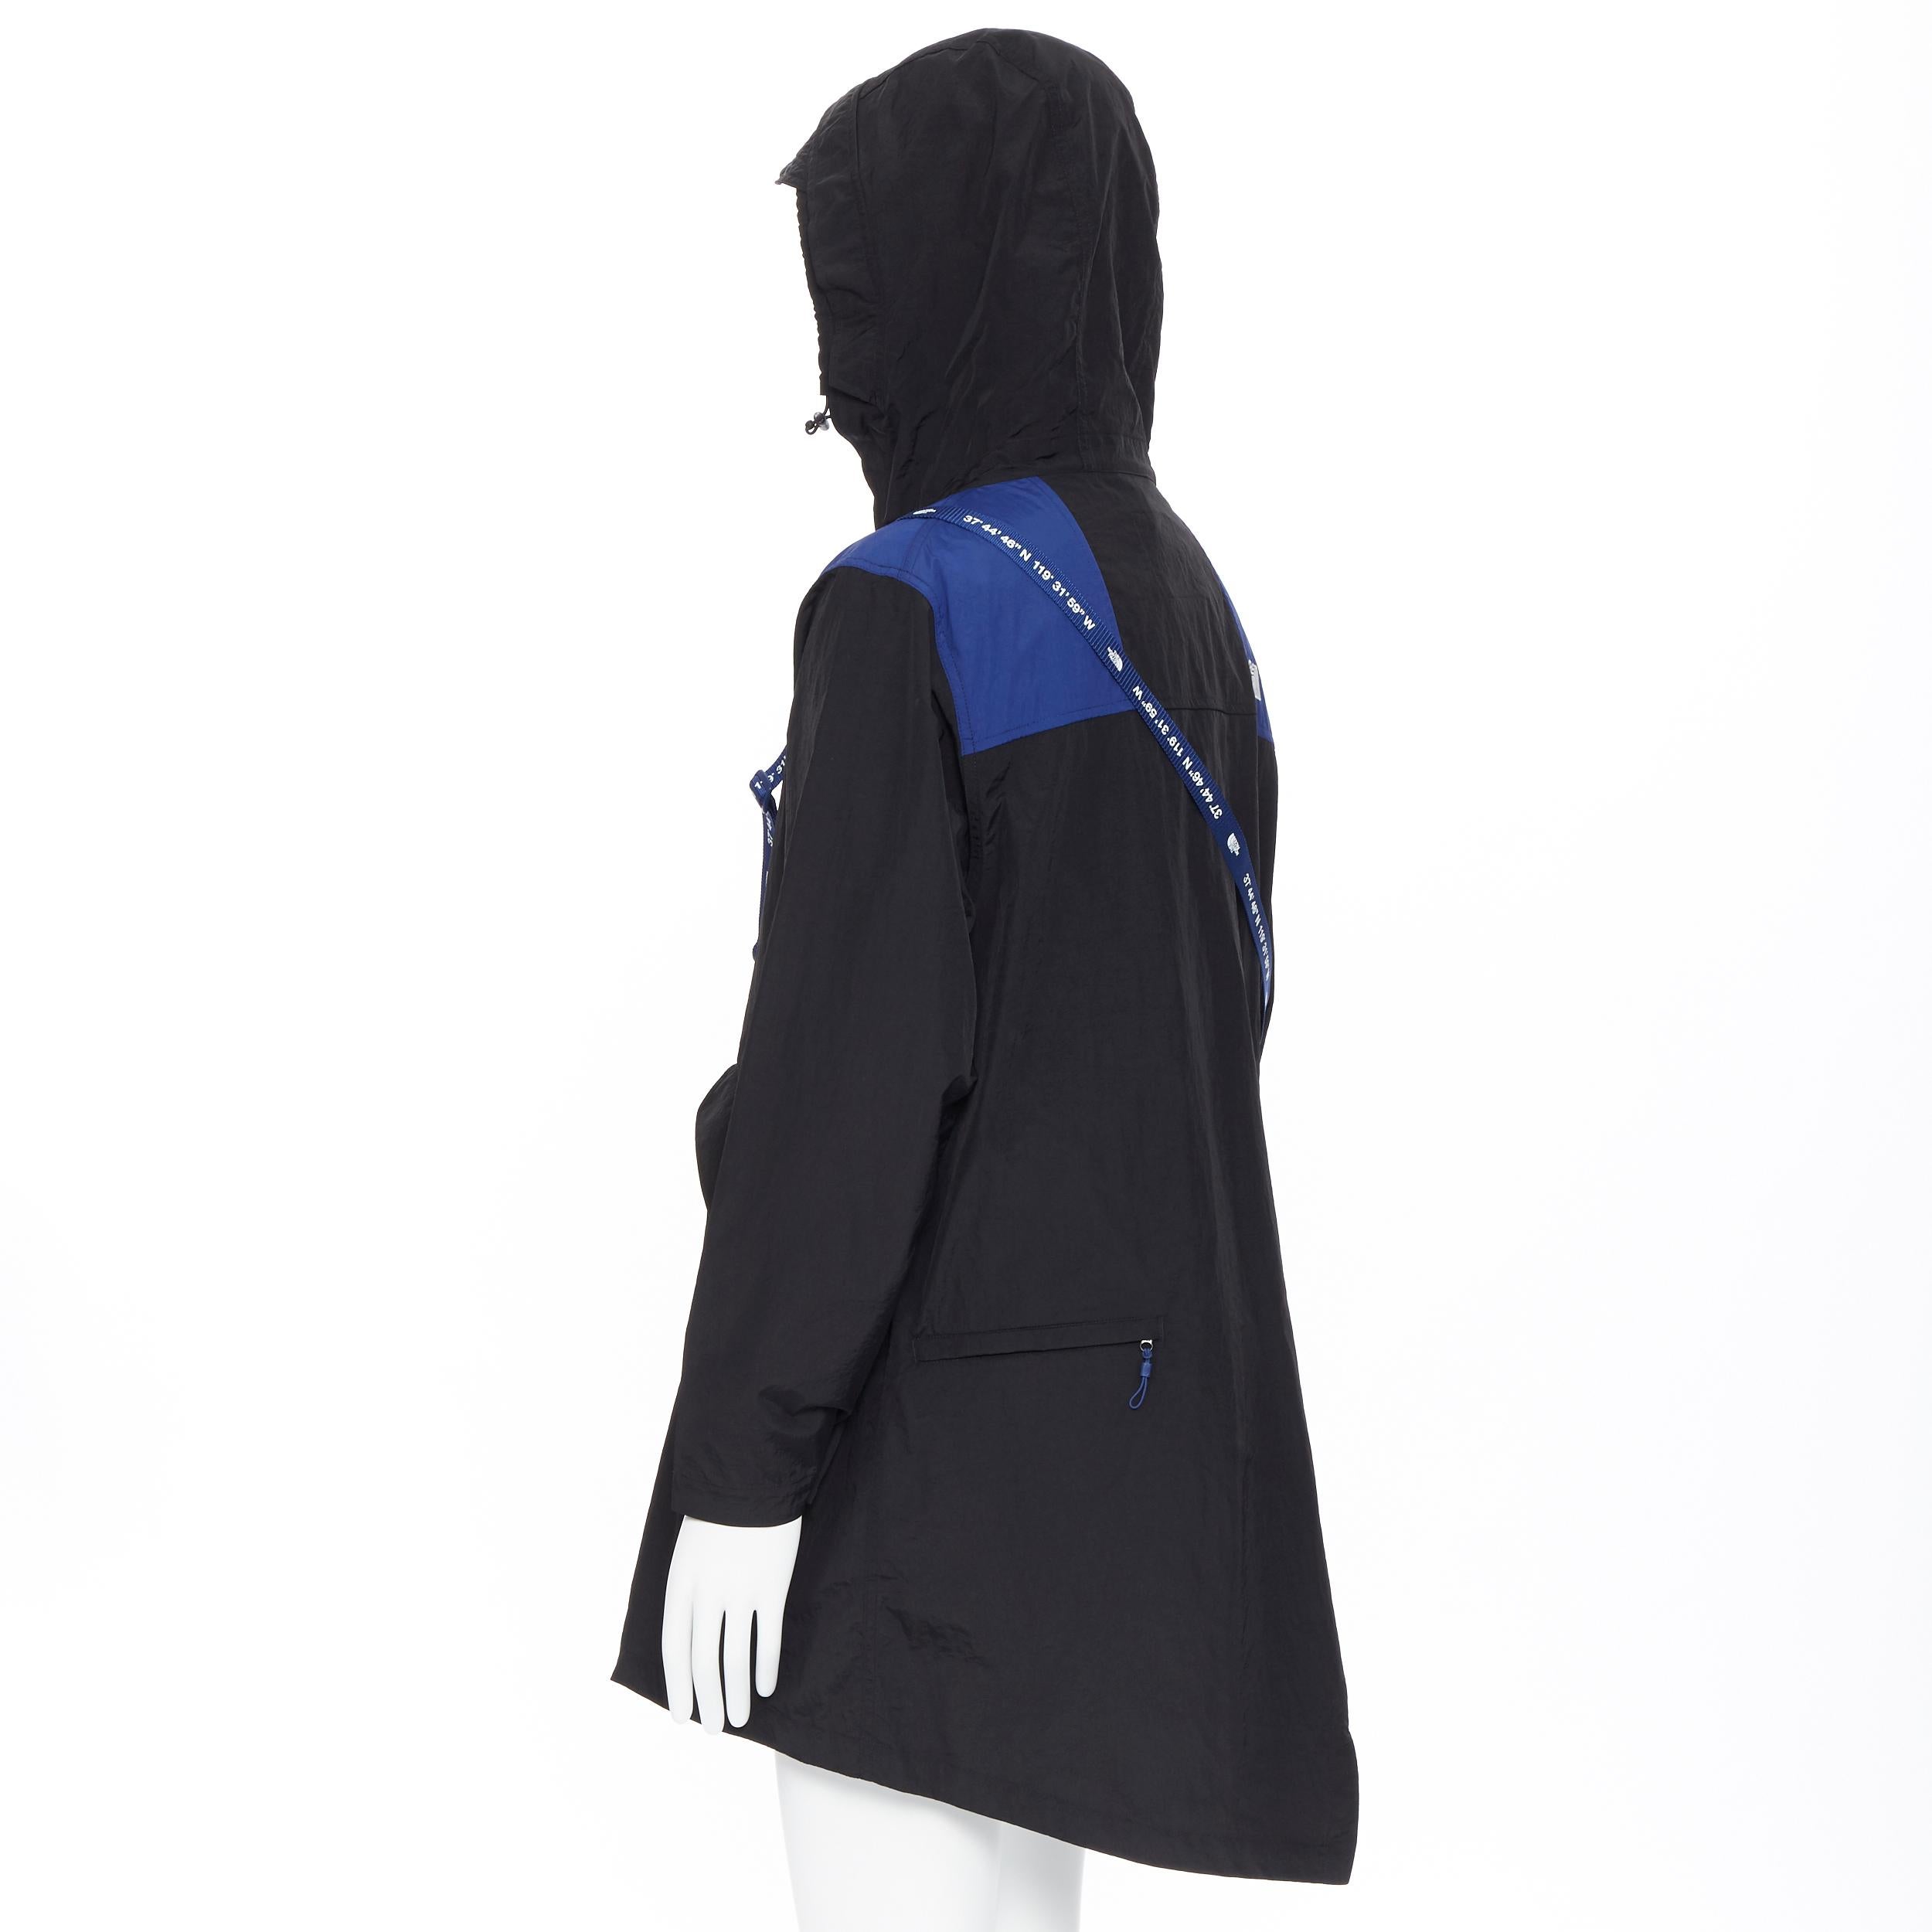 new THE NORTH FACE KAZUKI KARAISHI Black Flag Blue Bravo 2 long raincoat L / XL 2